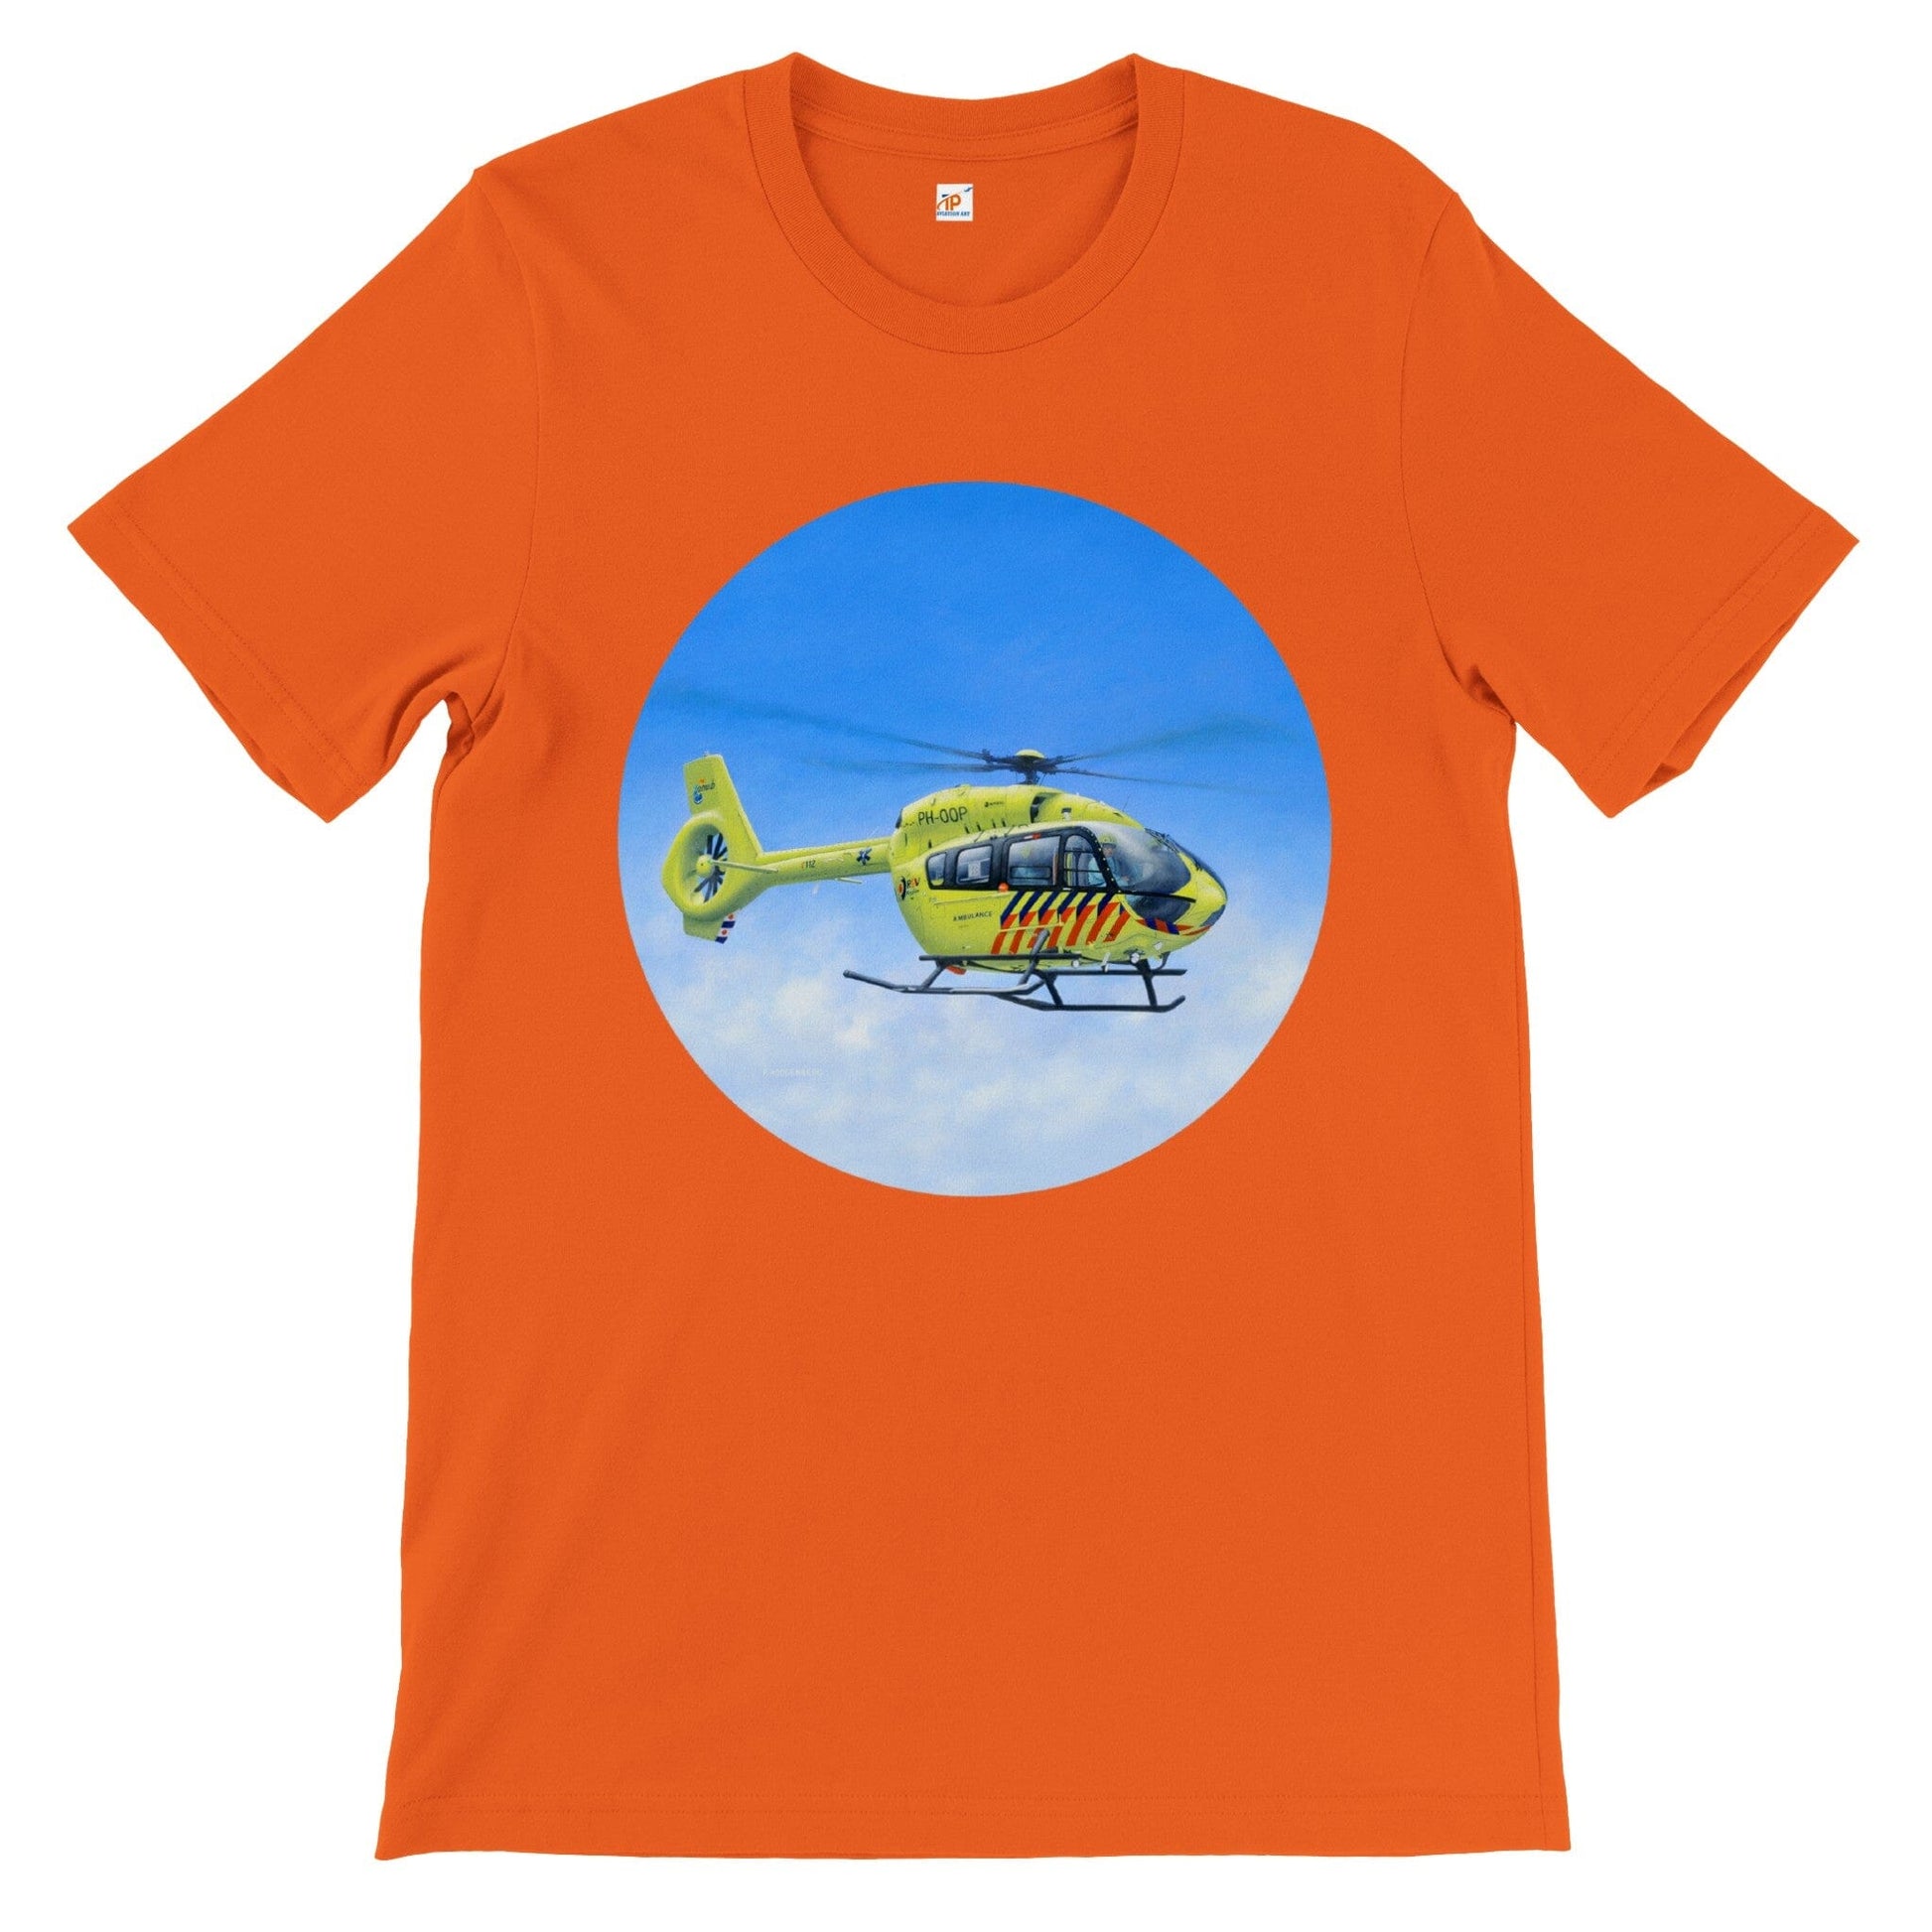 Peter Hoogenberg - T-shirt - Ambulance Helicopter Wadden Islands - Premium Unisex T-shirt TP Aviation Art Orange S 